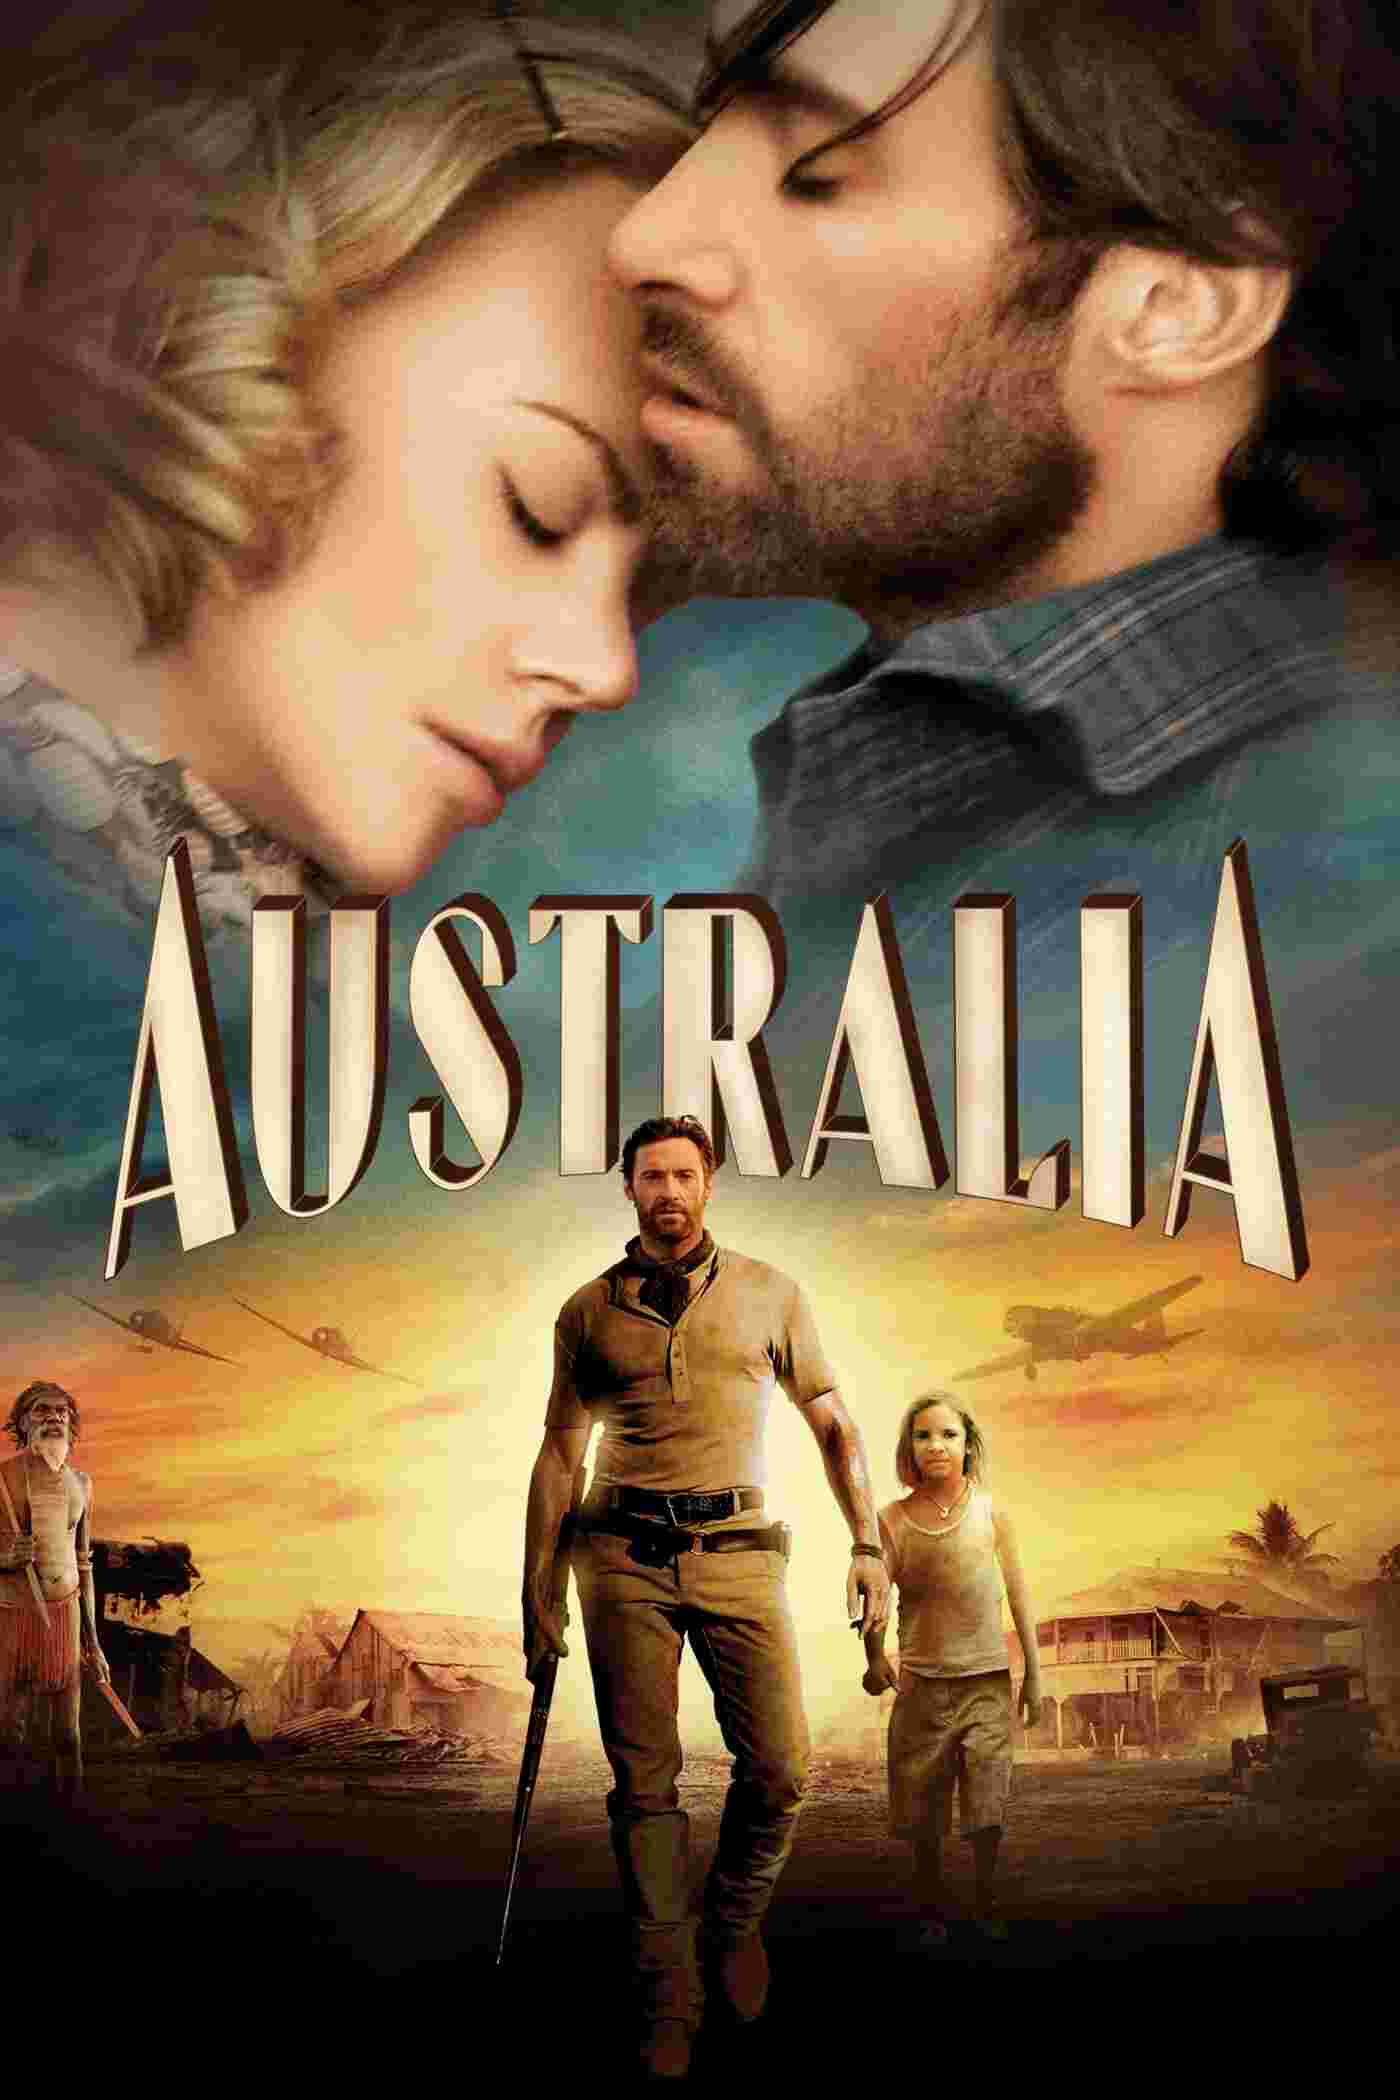 Australia (2008) Nicole Kidman